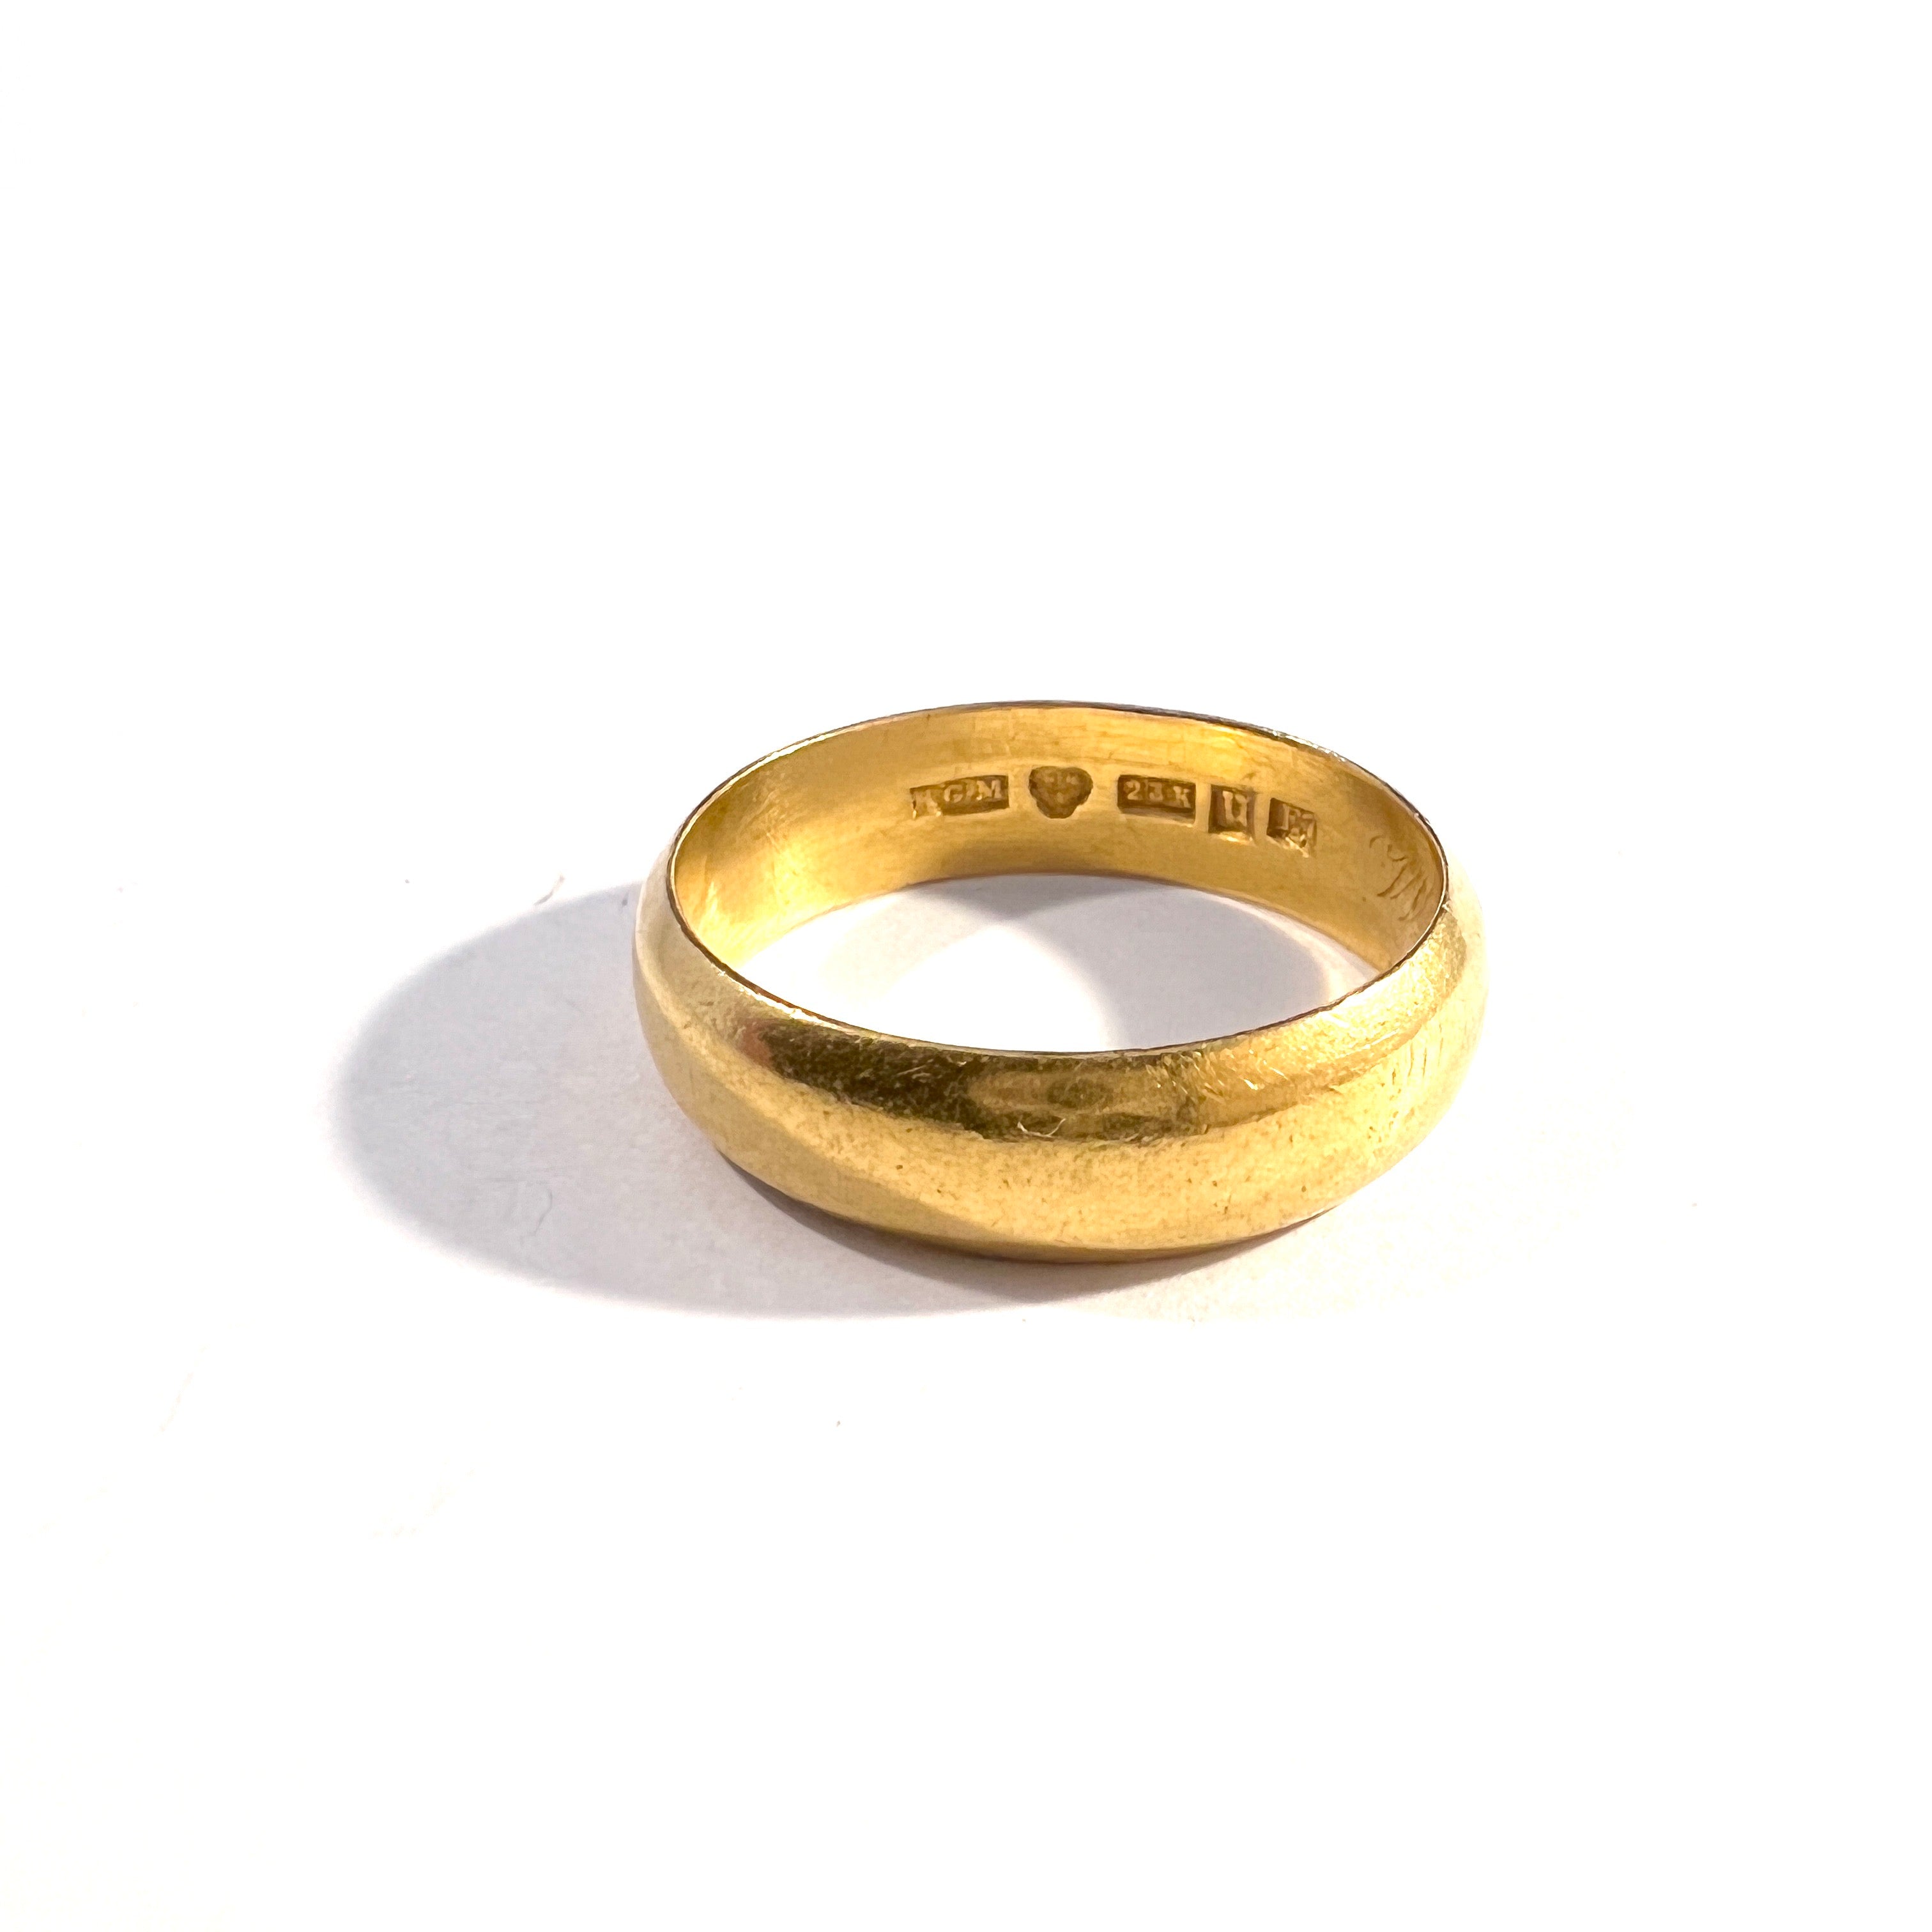 Markström, Sweden year 1907. Antique Chunky 23k Gold Wedding Band Ring.